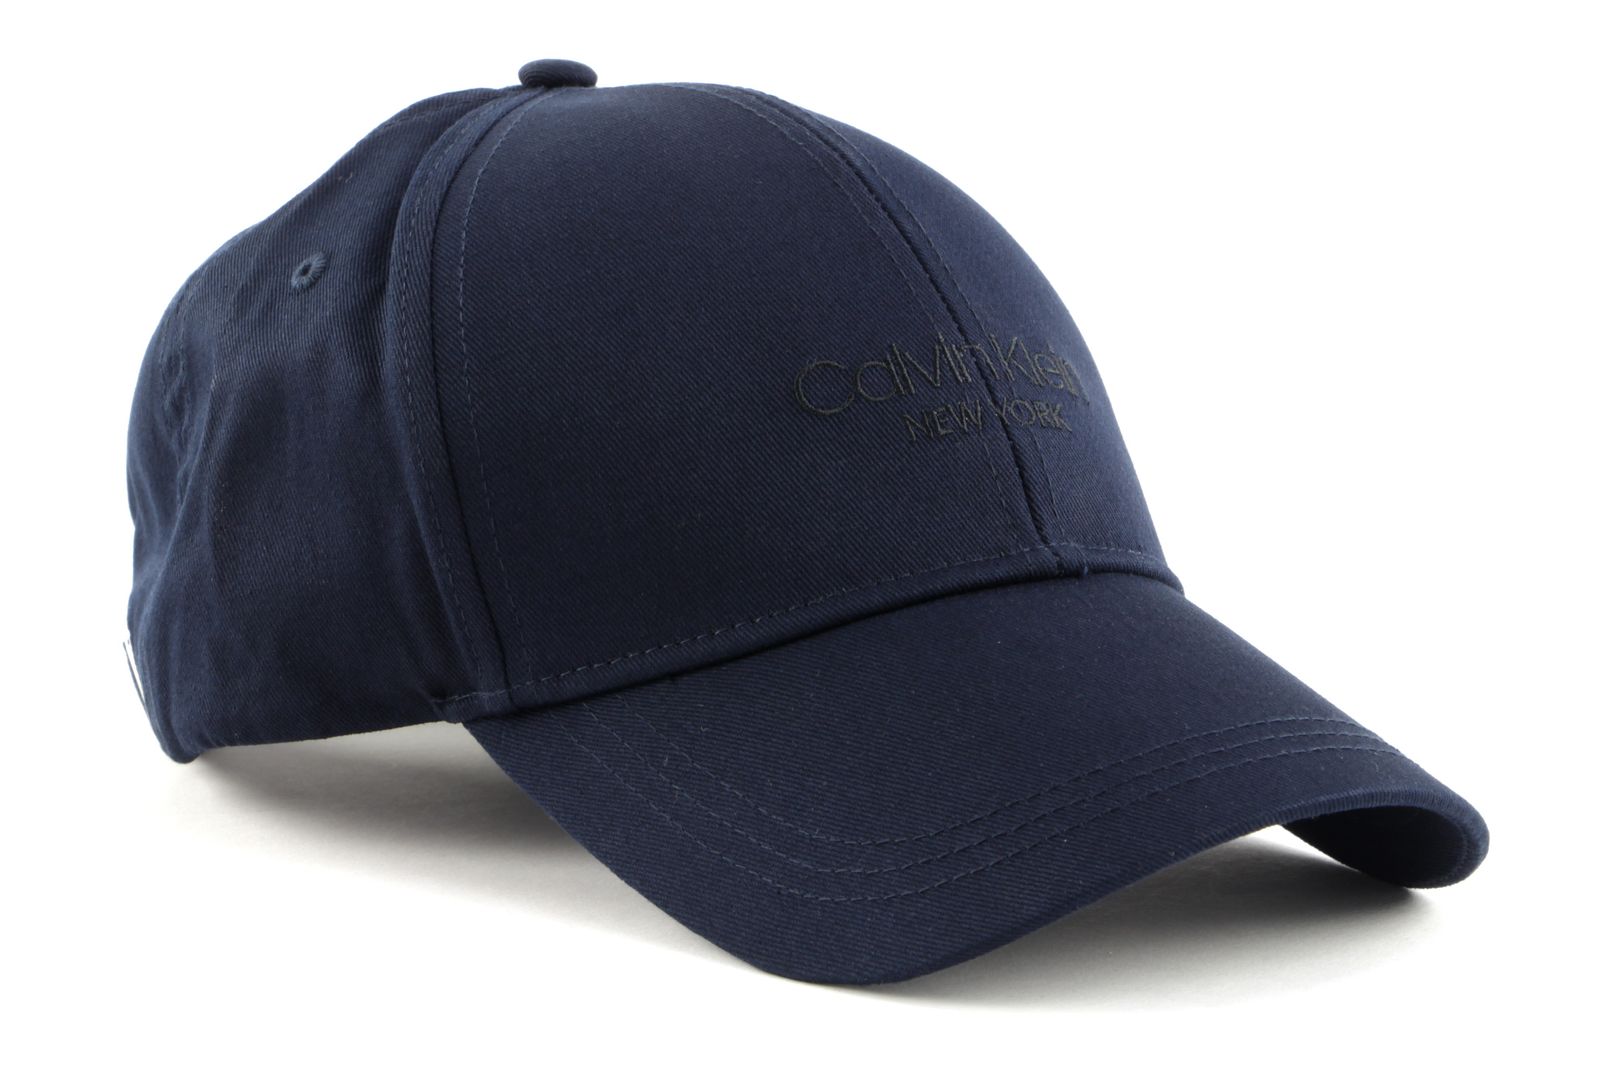 Cap purses & Navy bags, accessories BB online CK | Calvin Klein Buy | Cap modeherz